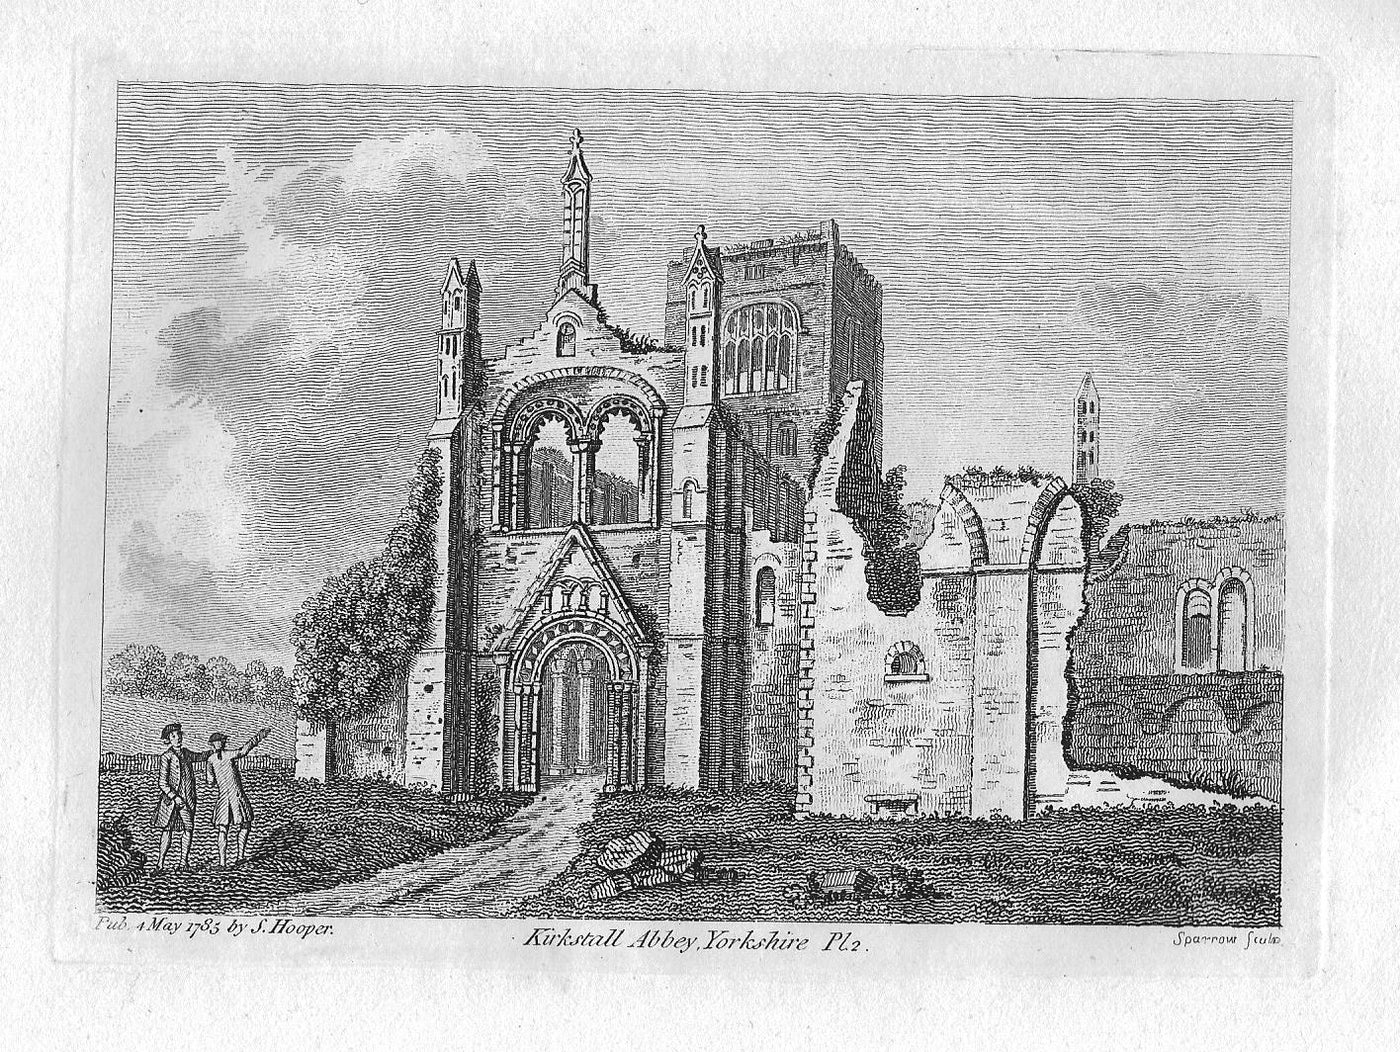 Kirkstall Abbey Yorkshire antique print